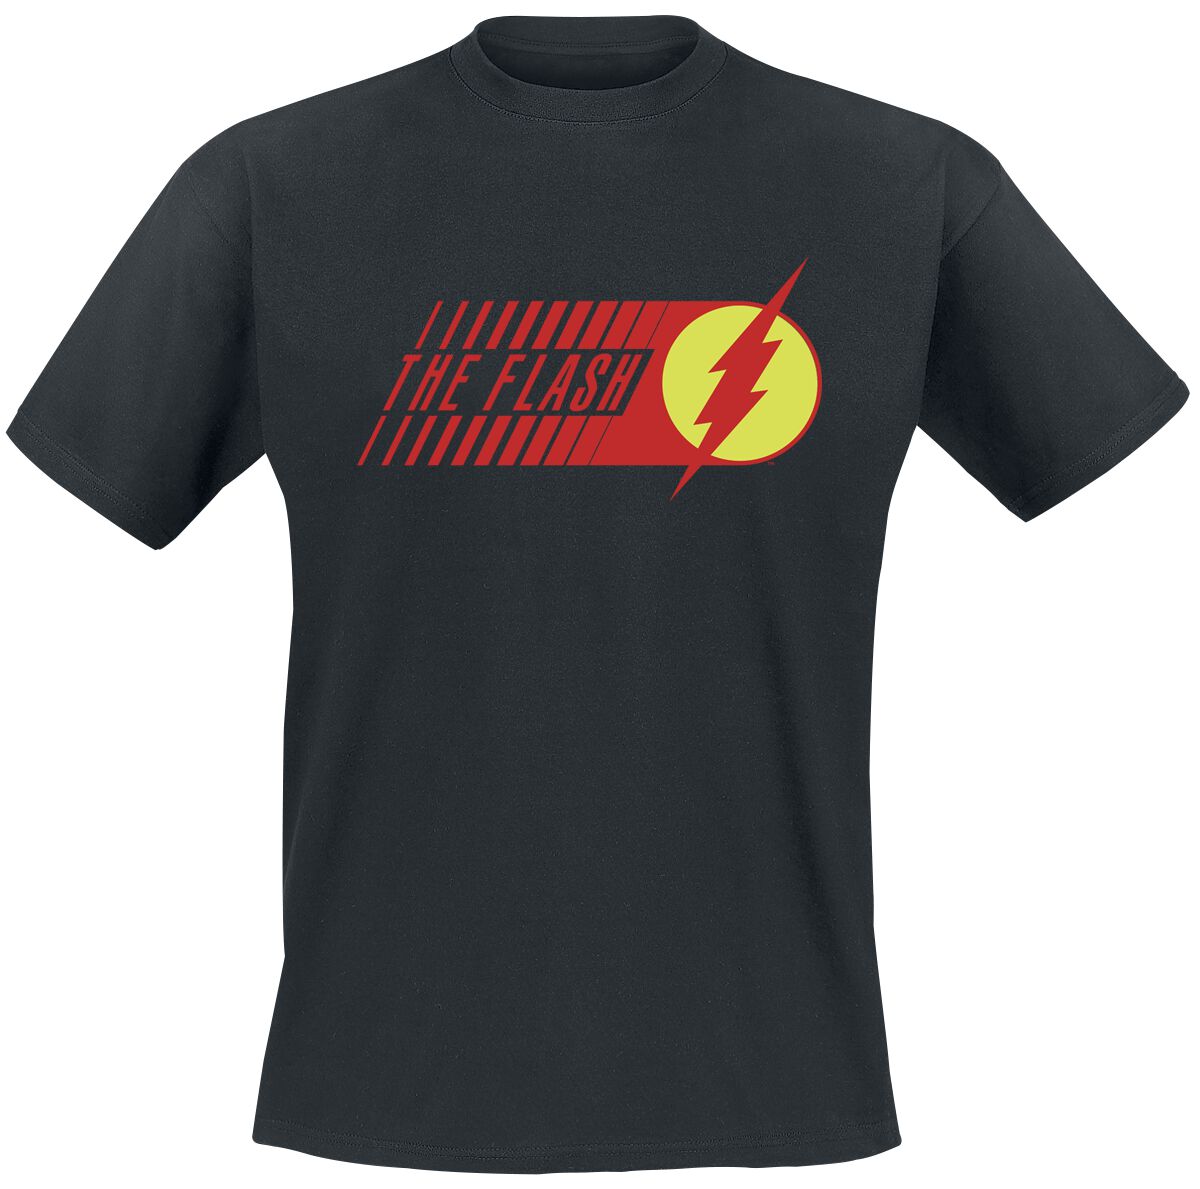 The Flash Flash - Starlabs T-Shirt schwarz in XXL